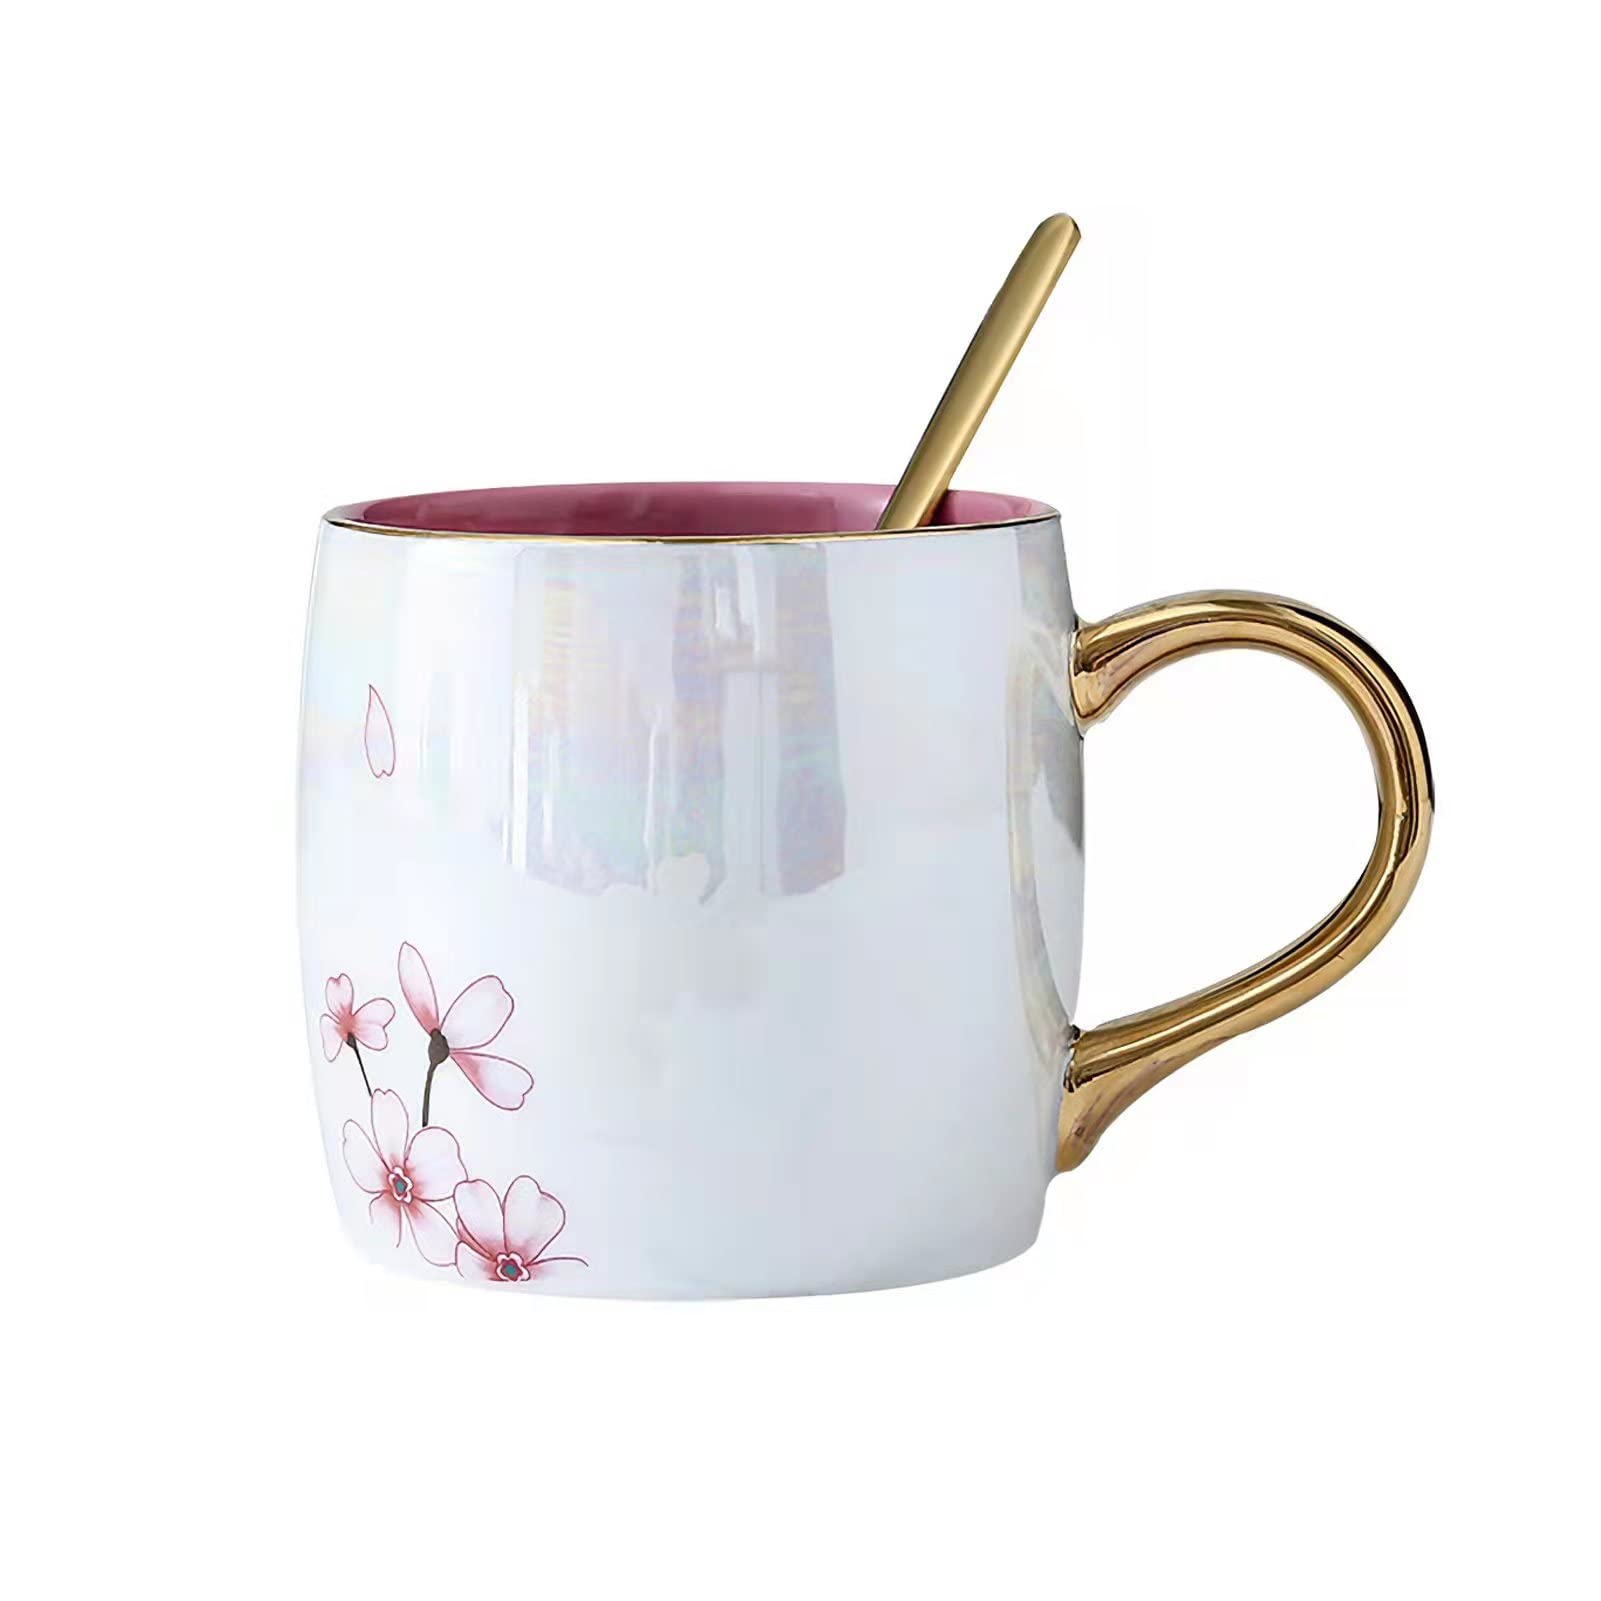 KEYIGOU 13.5oz Cherry Blossom Ceramic Mug with Lid Gold Spoon Pretty Tea Cup Coffee Mugs for Women Unique Sakura Gifts